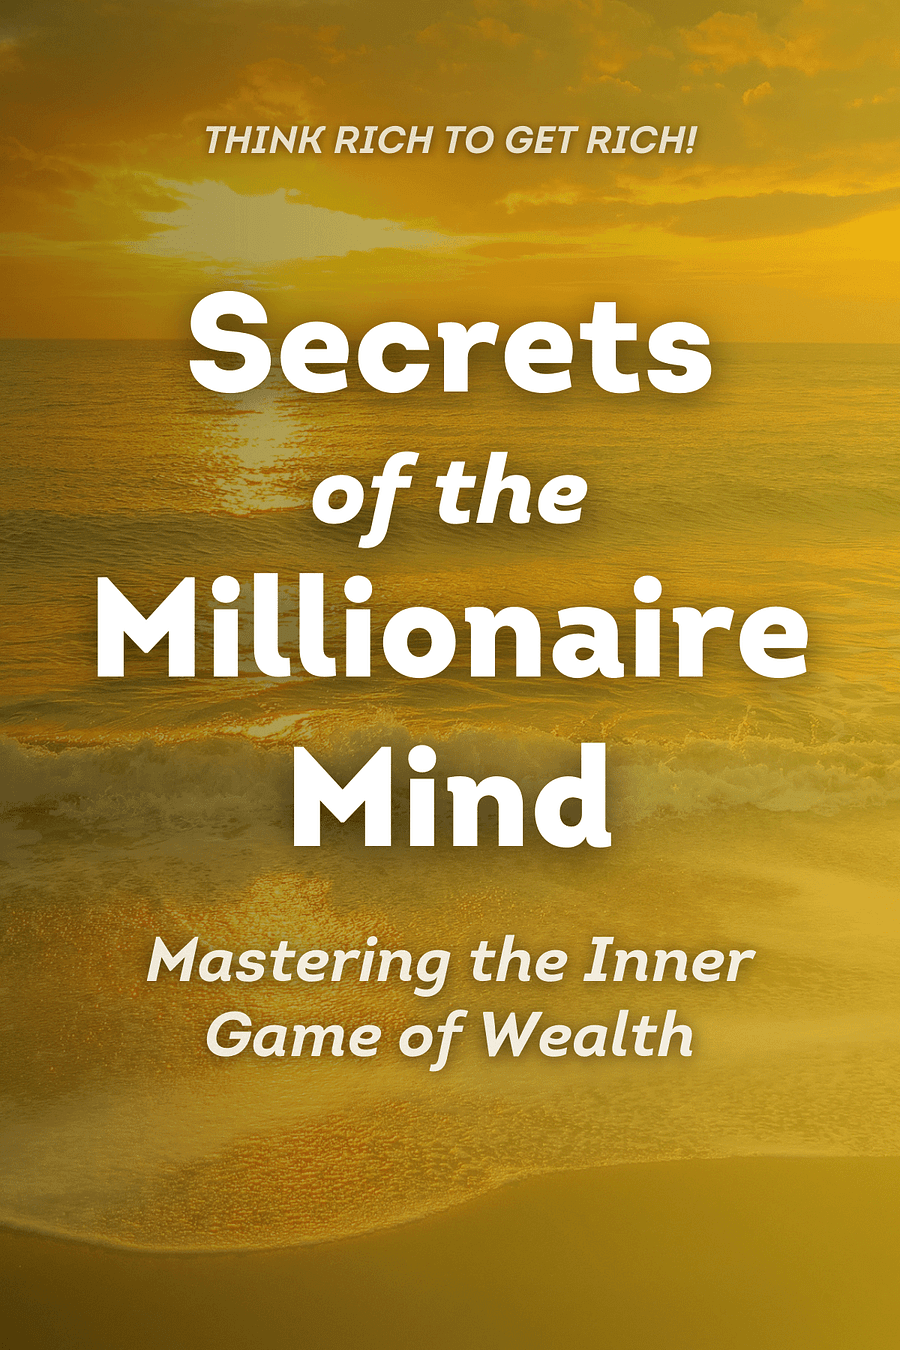 Secrets of the Millionaire Mind by T. Harv Eker - Book Summary